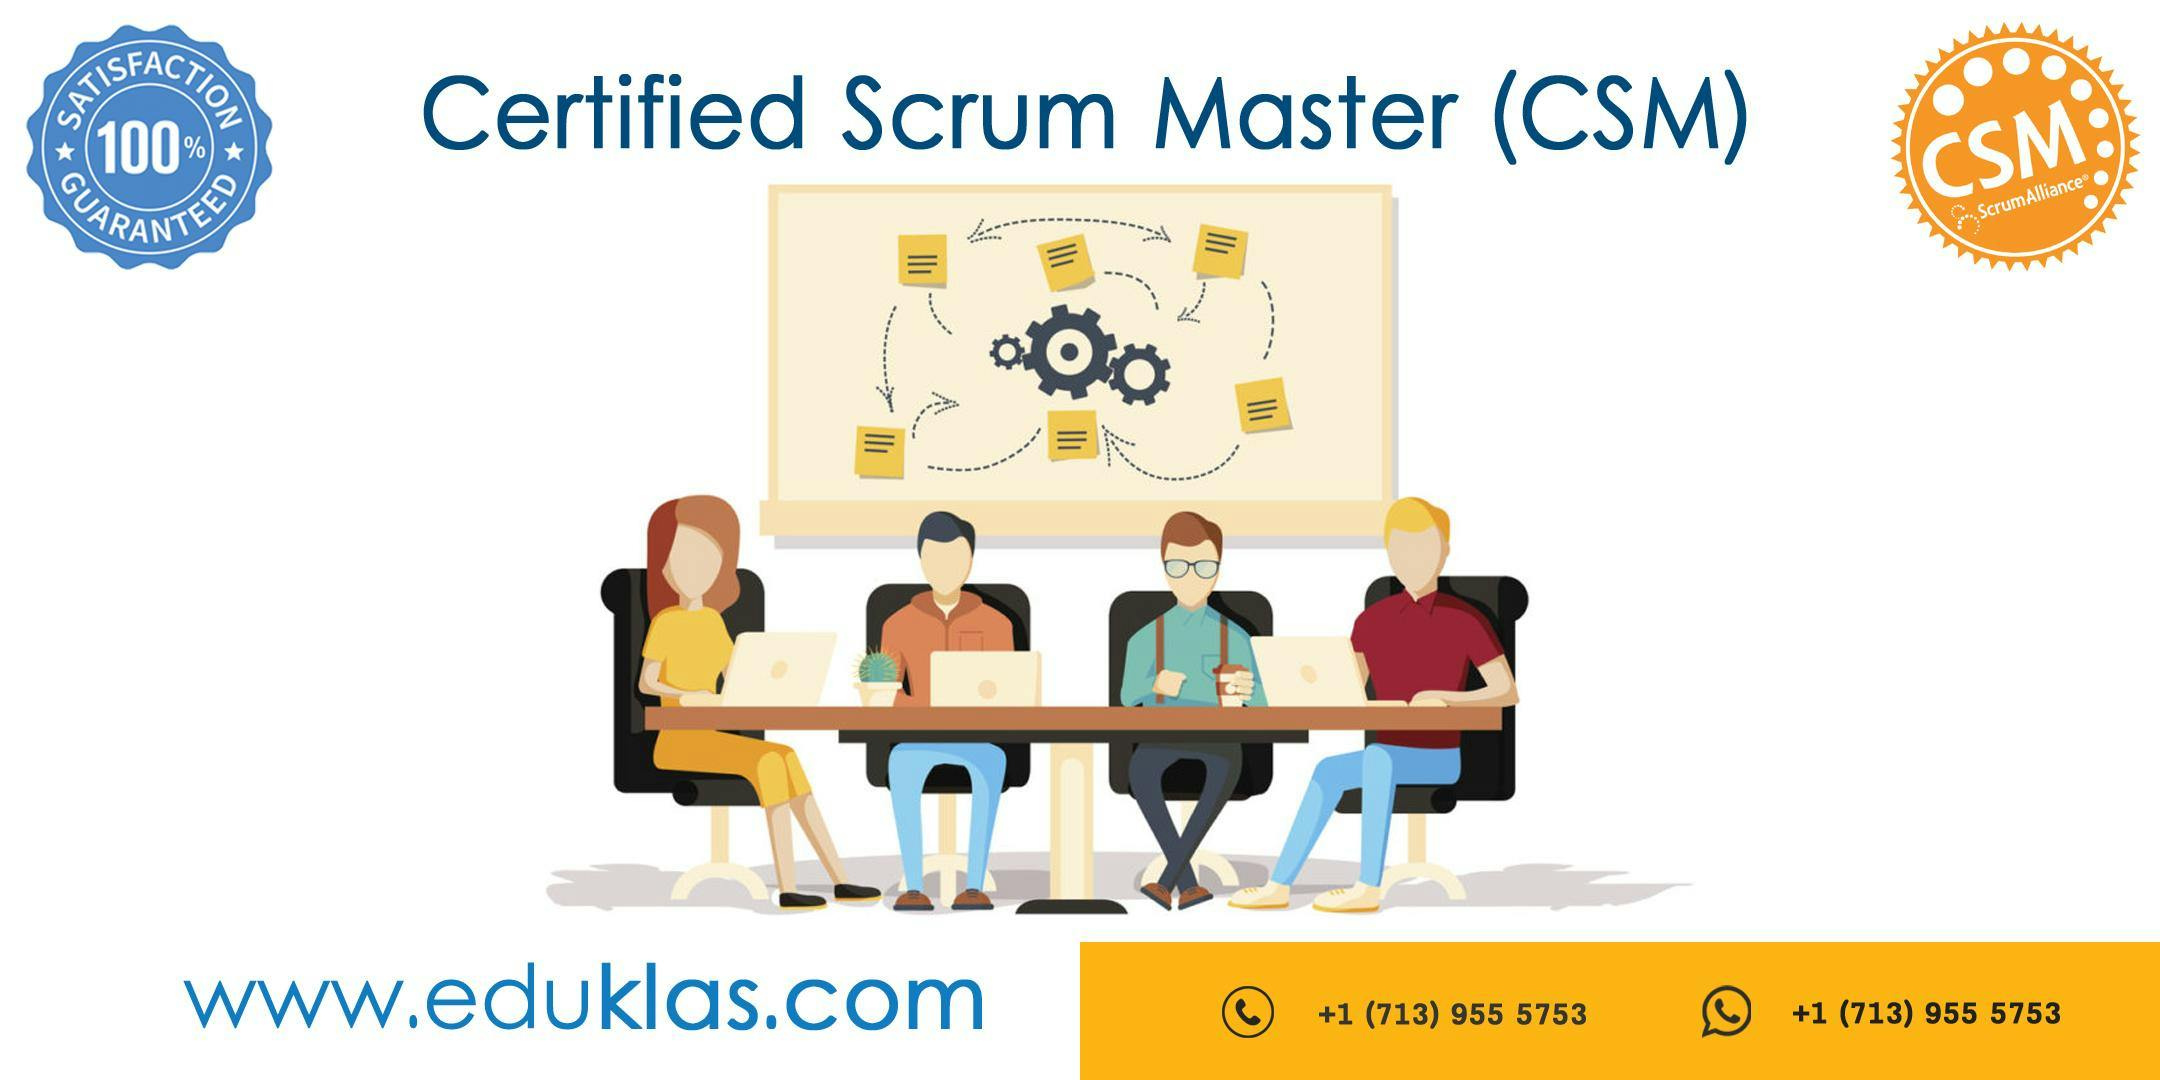 Scrum Master Certification | CSM Training | CSM Certification Workshop | Certified Scrum Master (CSM) Training in Lakewood, CO | Eduklas